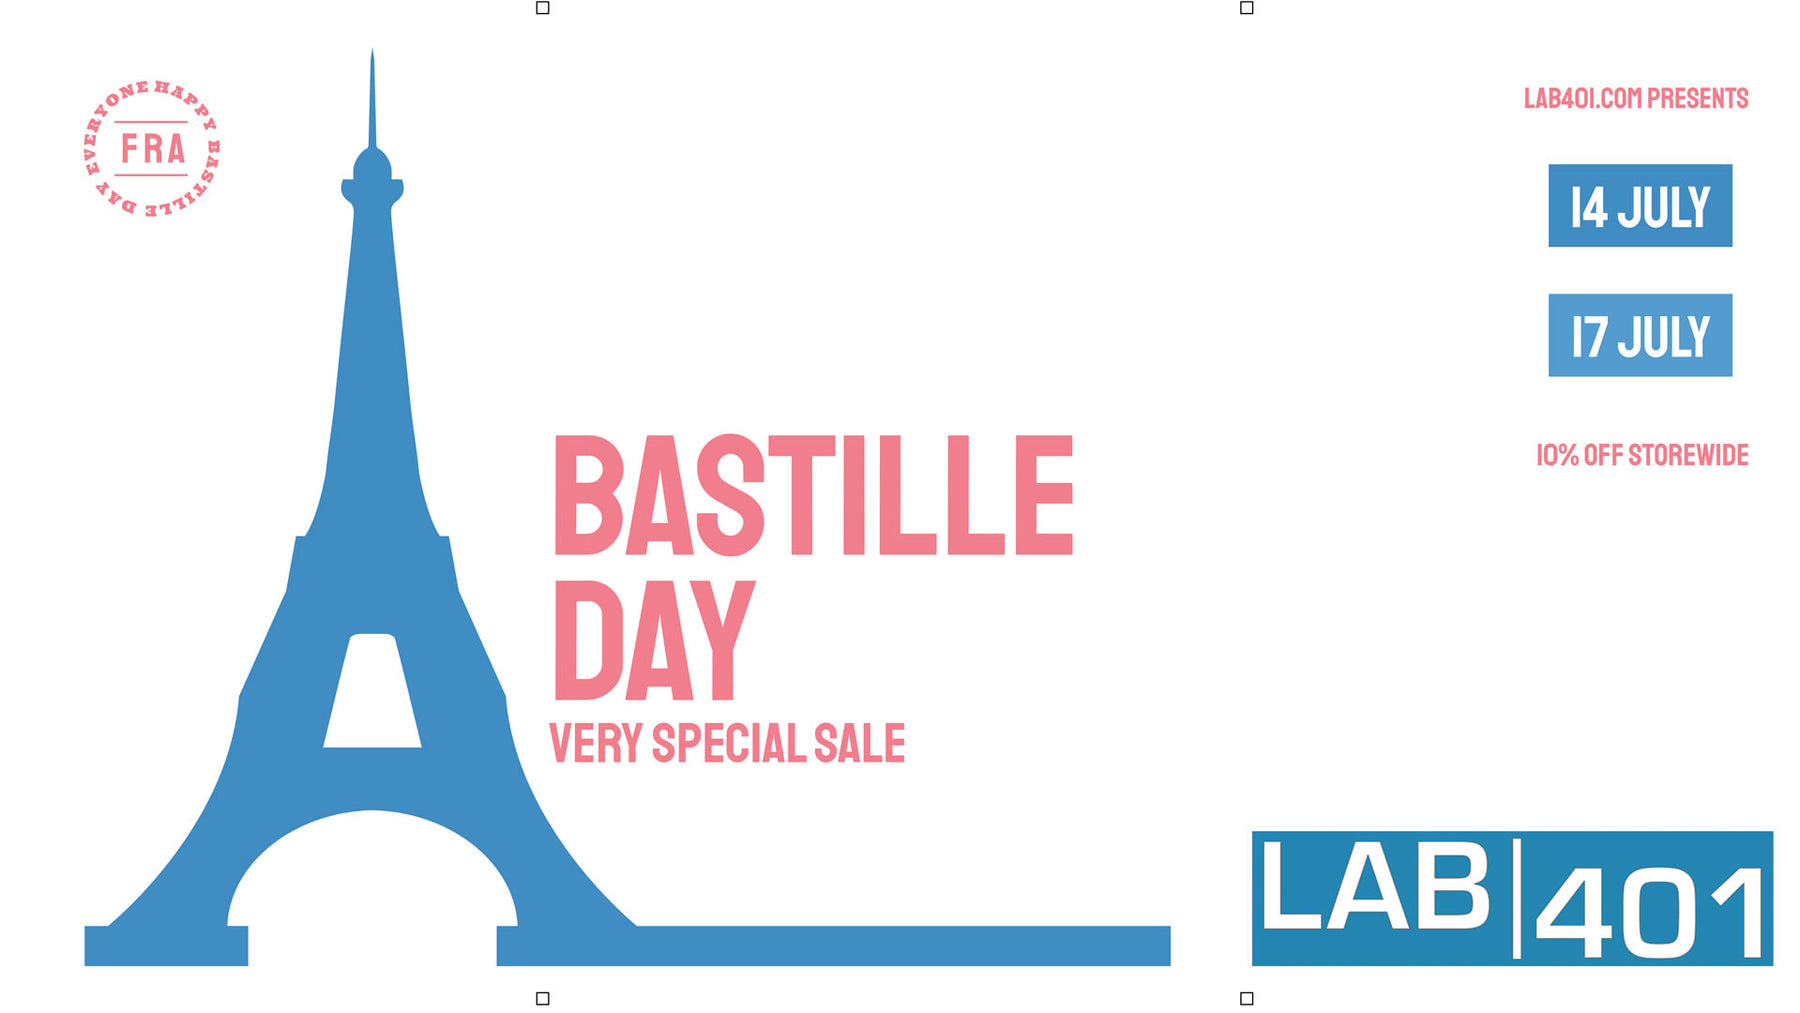 Celebrating France's Bastille Day with Lab401